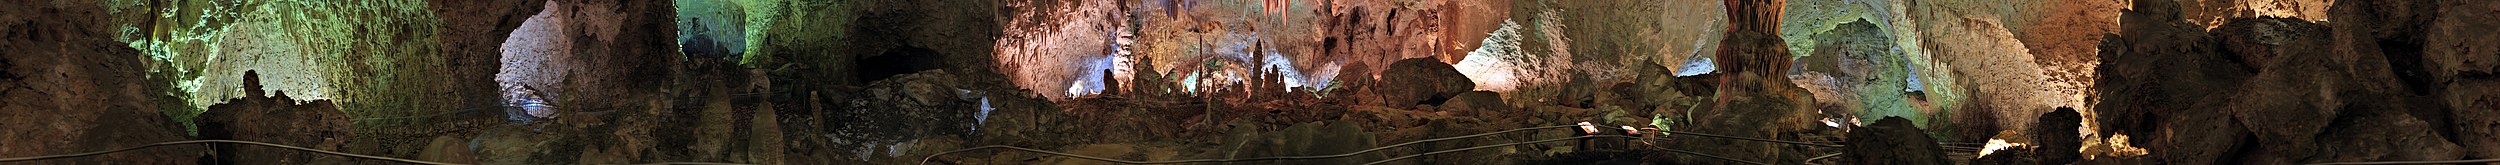 Unutrašnjost sustava špilja Carlsbad Caverns